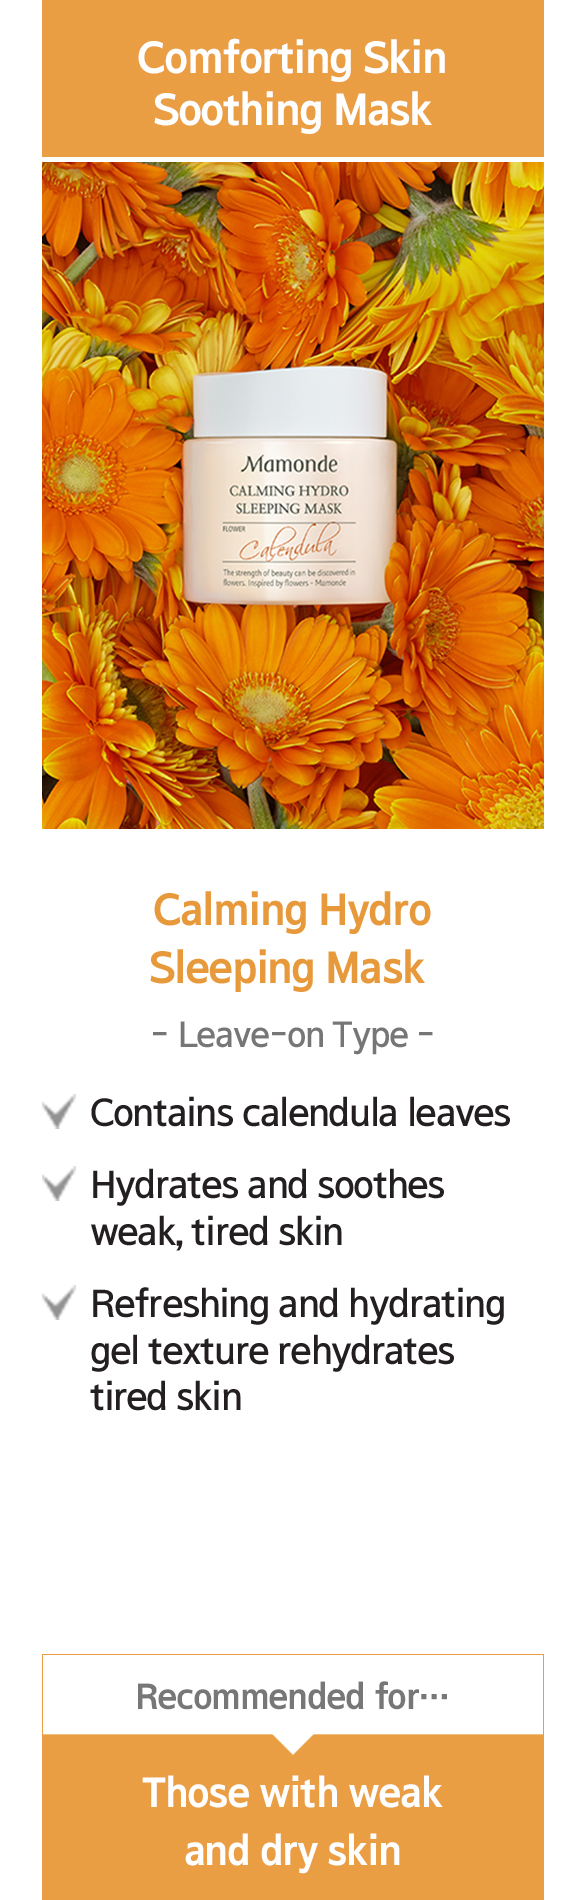 calming hydro sleeping mask detail link